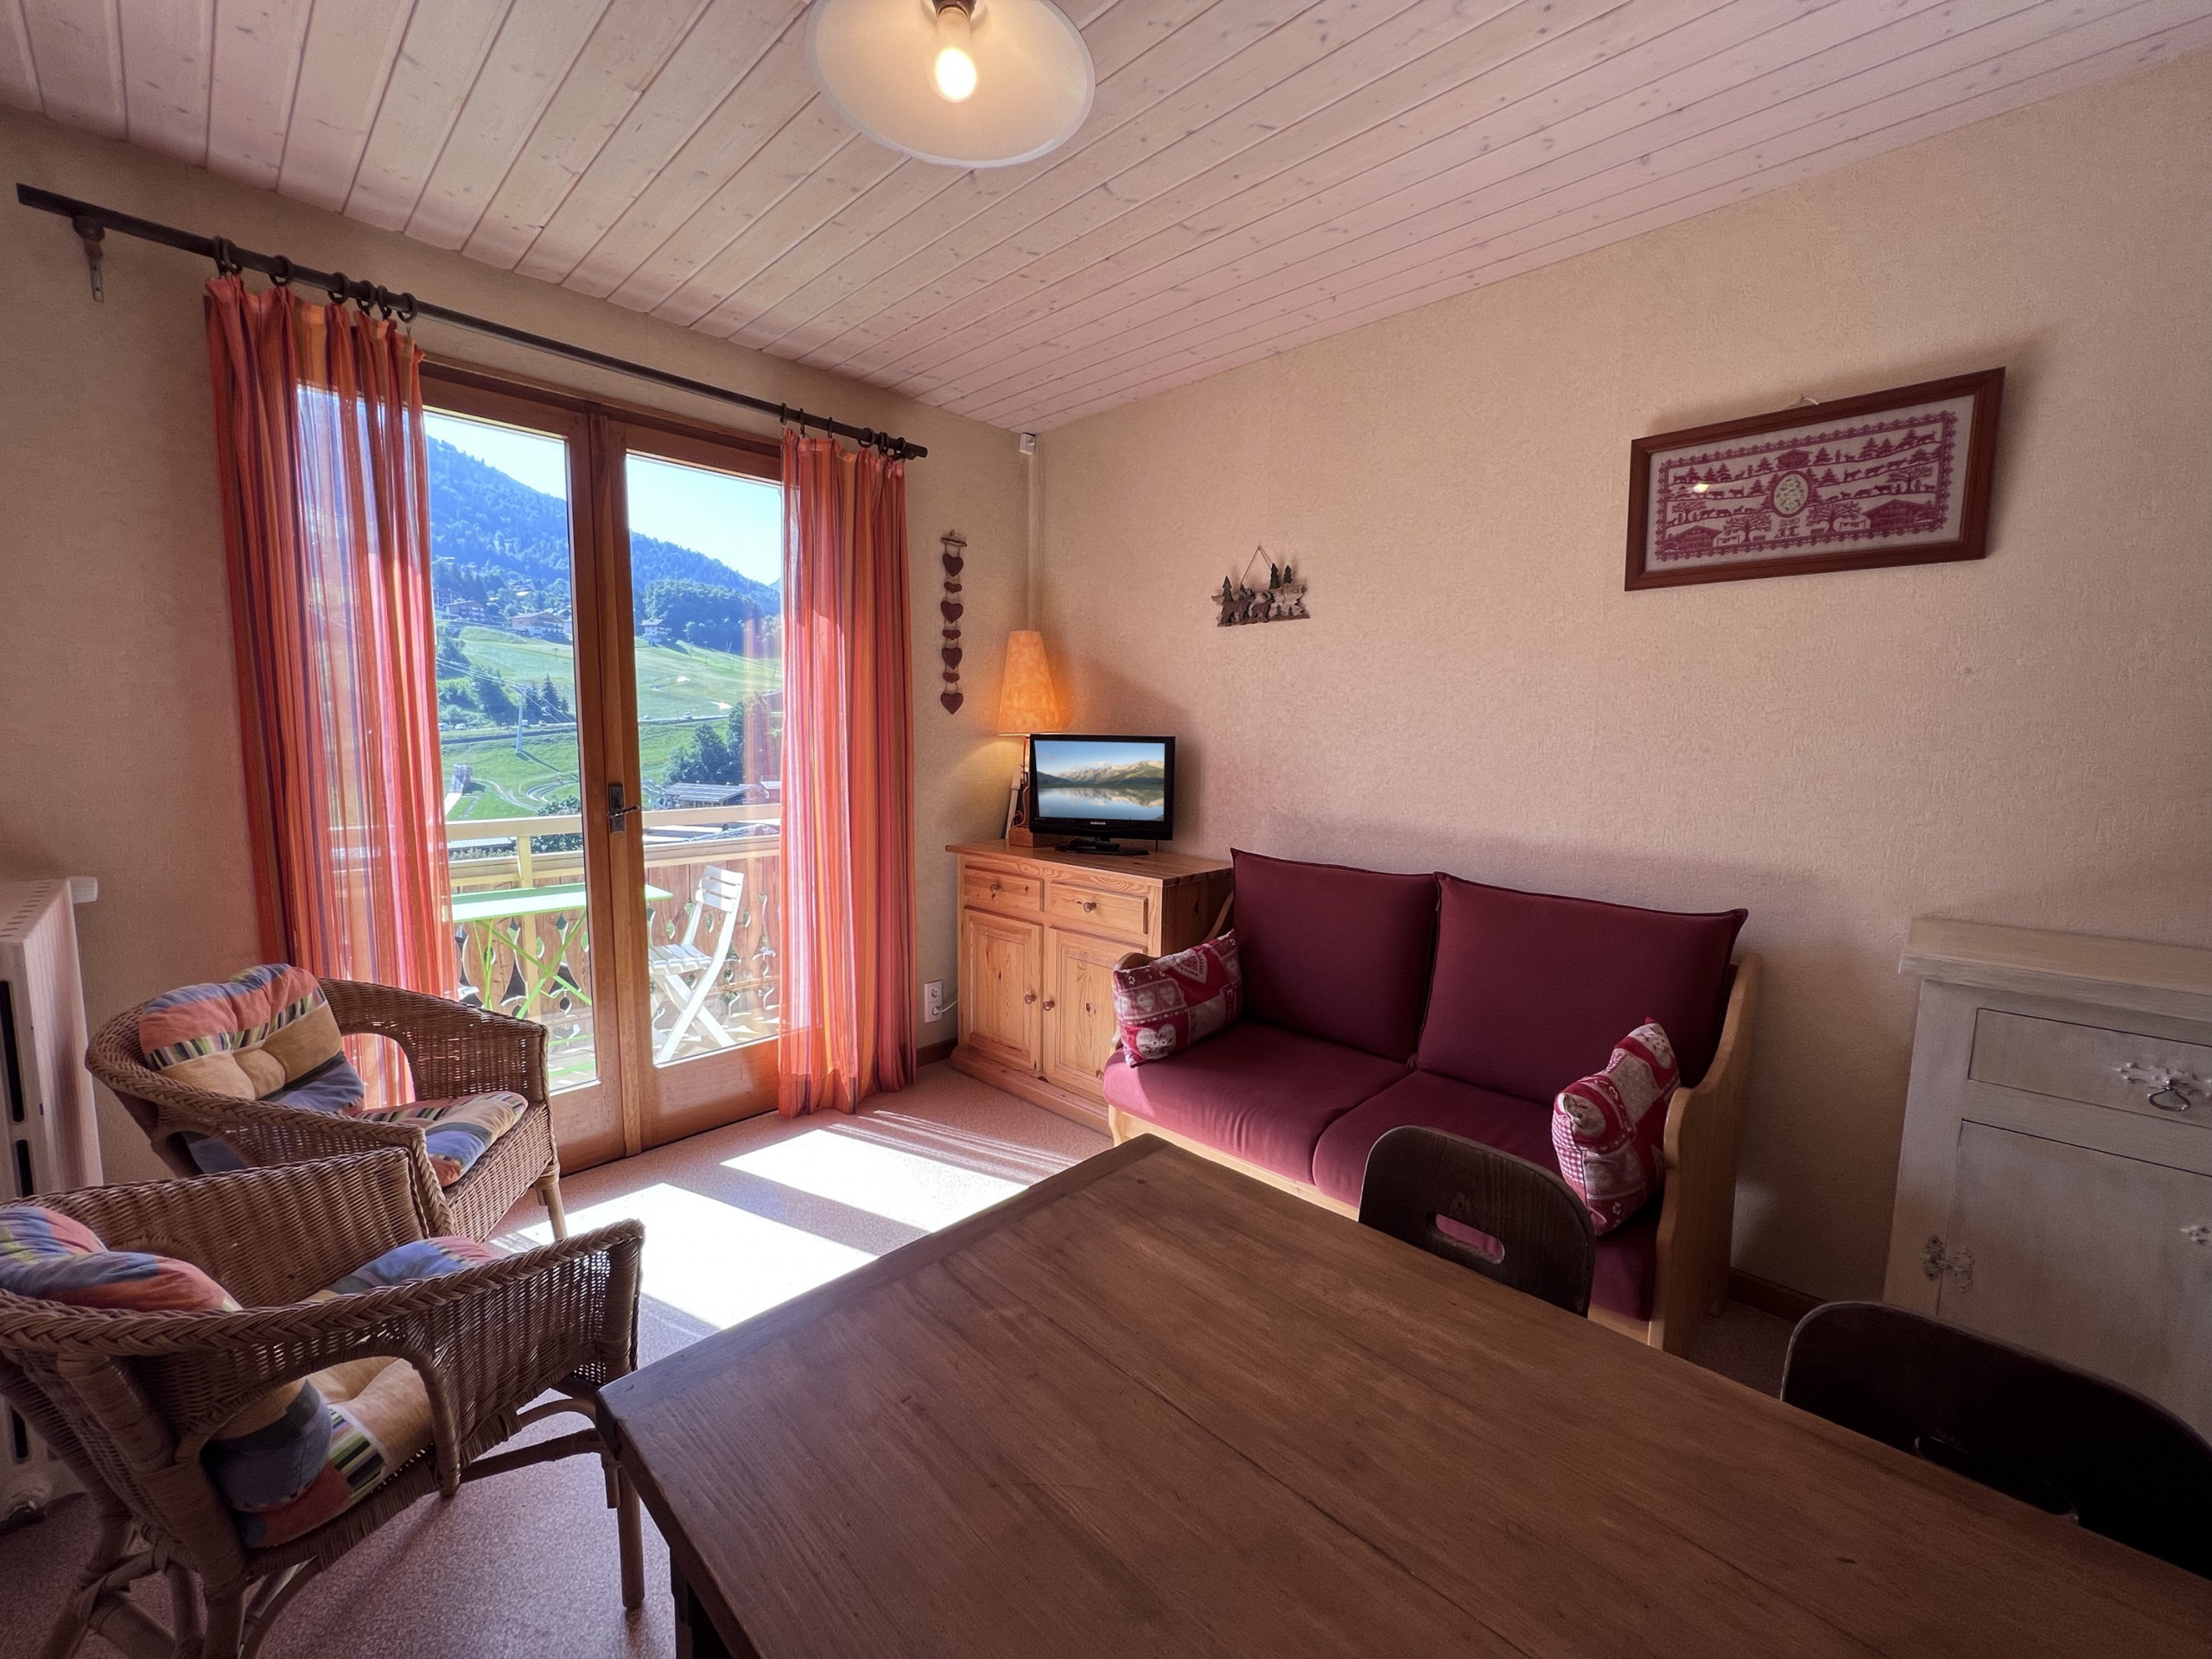  in La Clusaz - Crepuscule 5 - Apartment near ski slopes and village, 2* 4 pers.